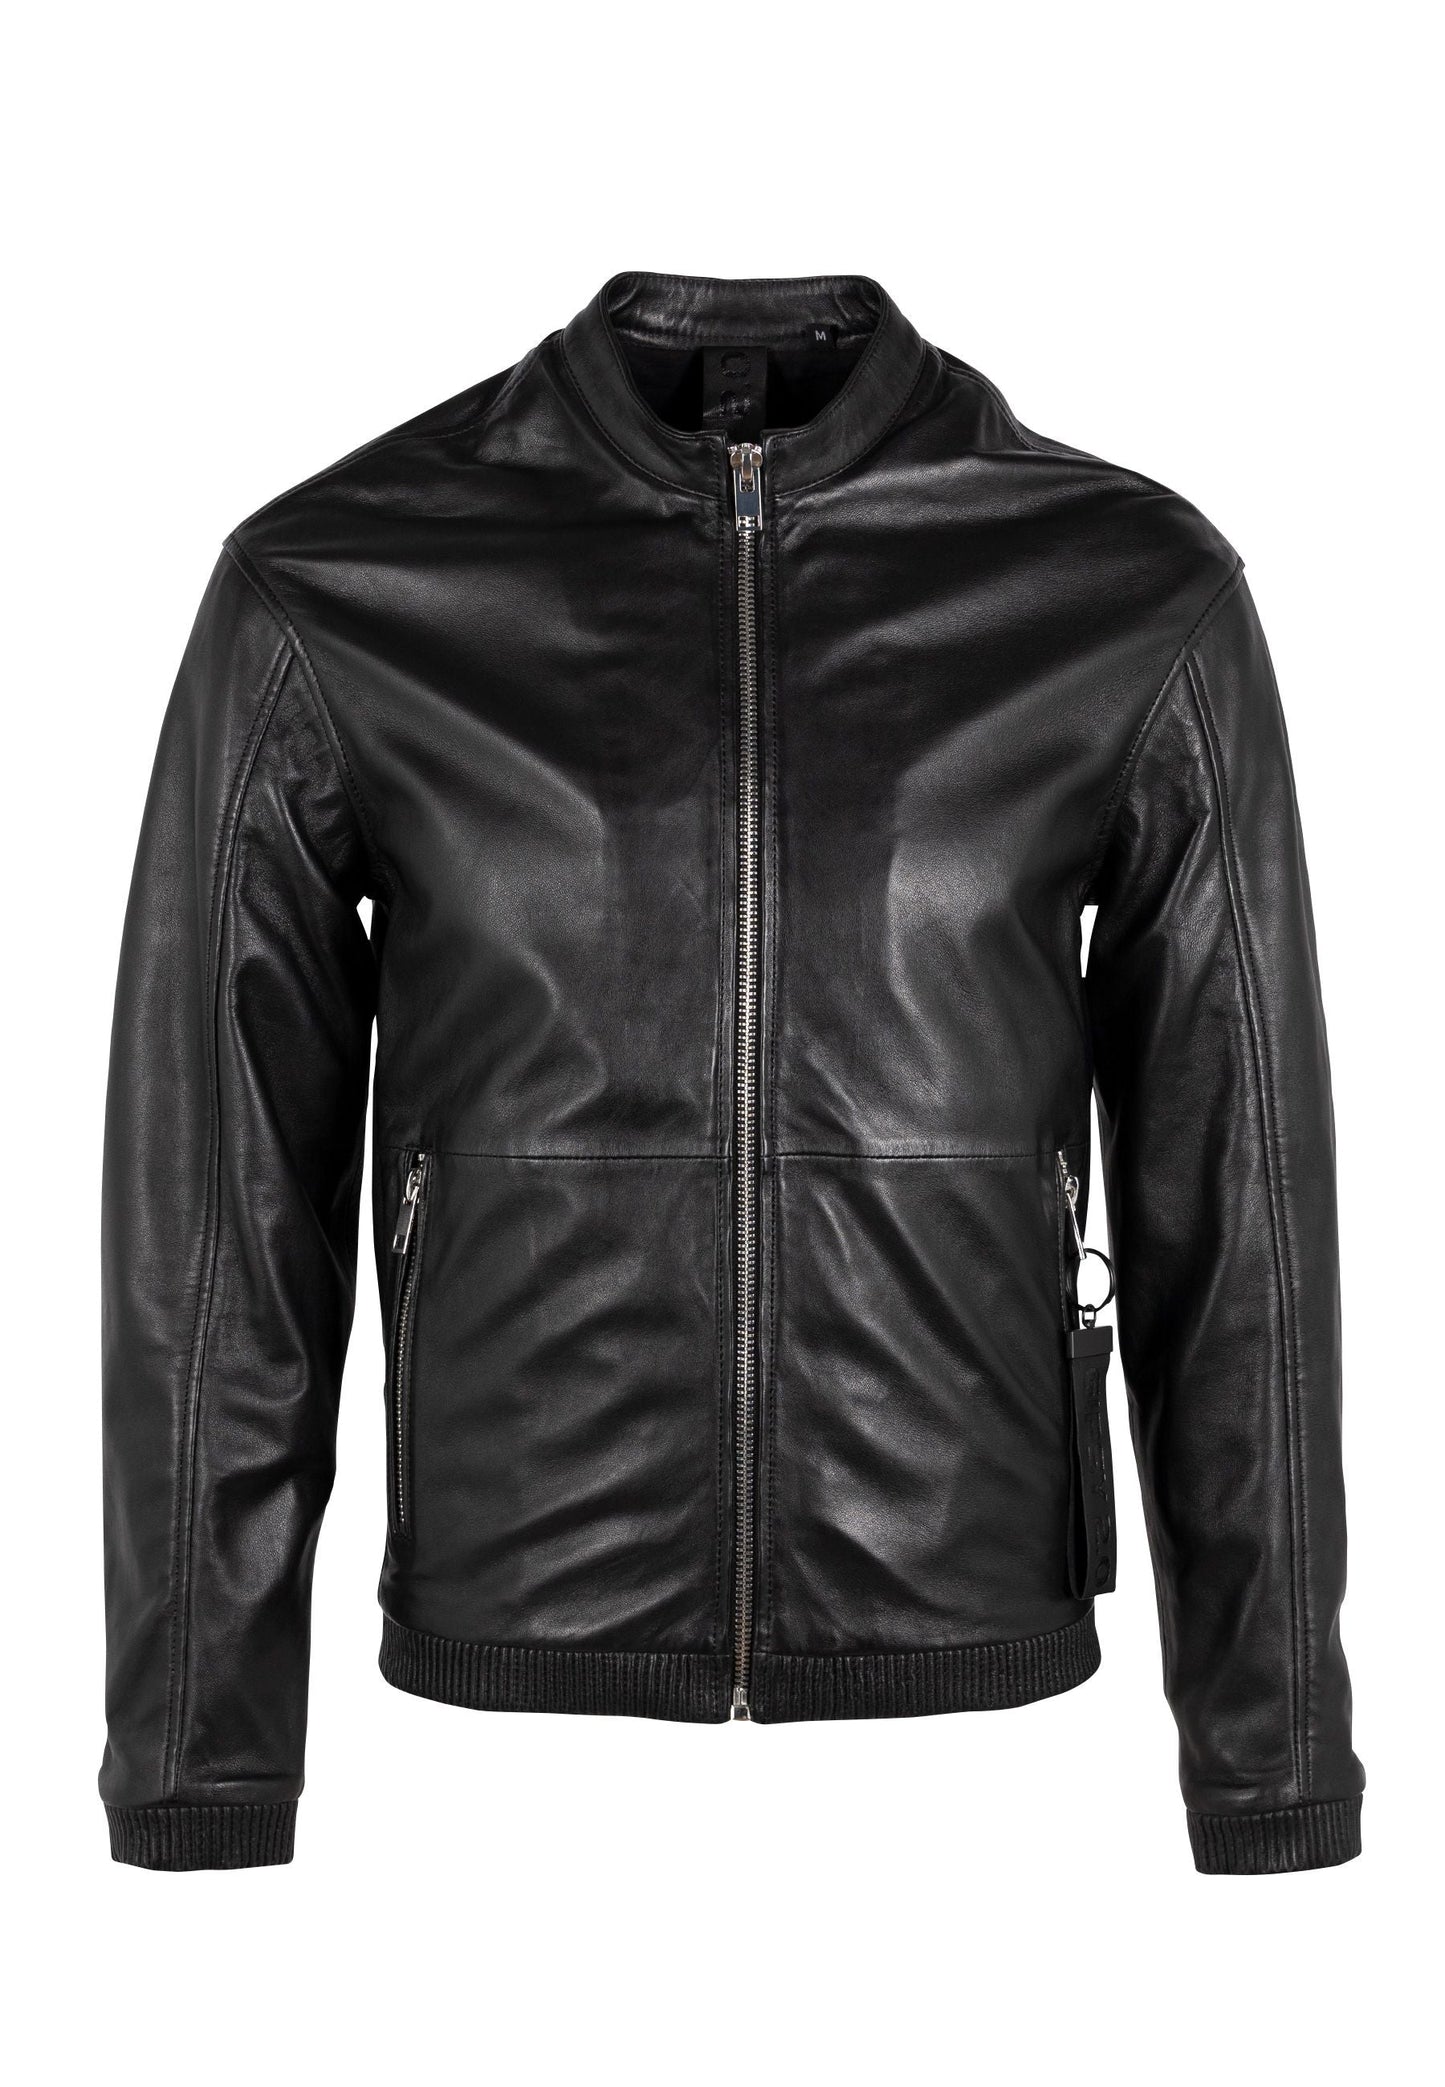 Airth LF Leather Jacket, Black